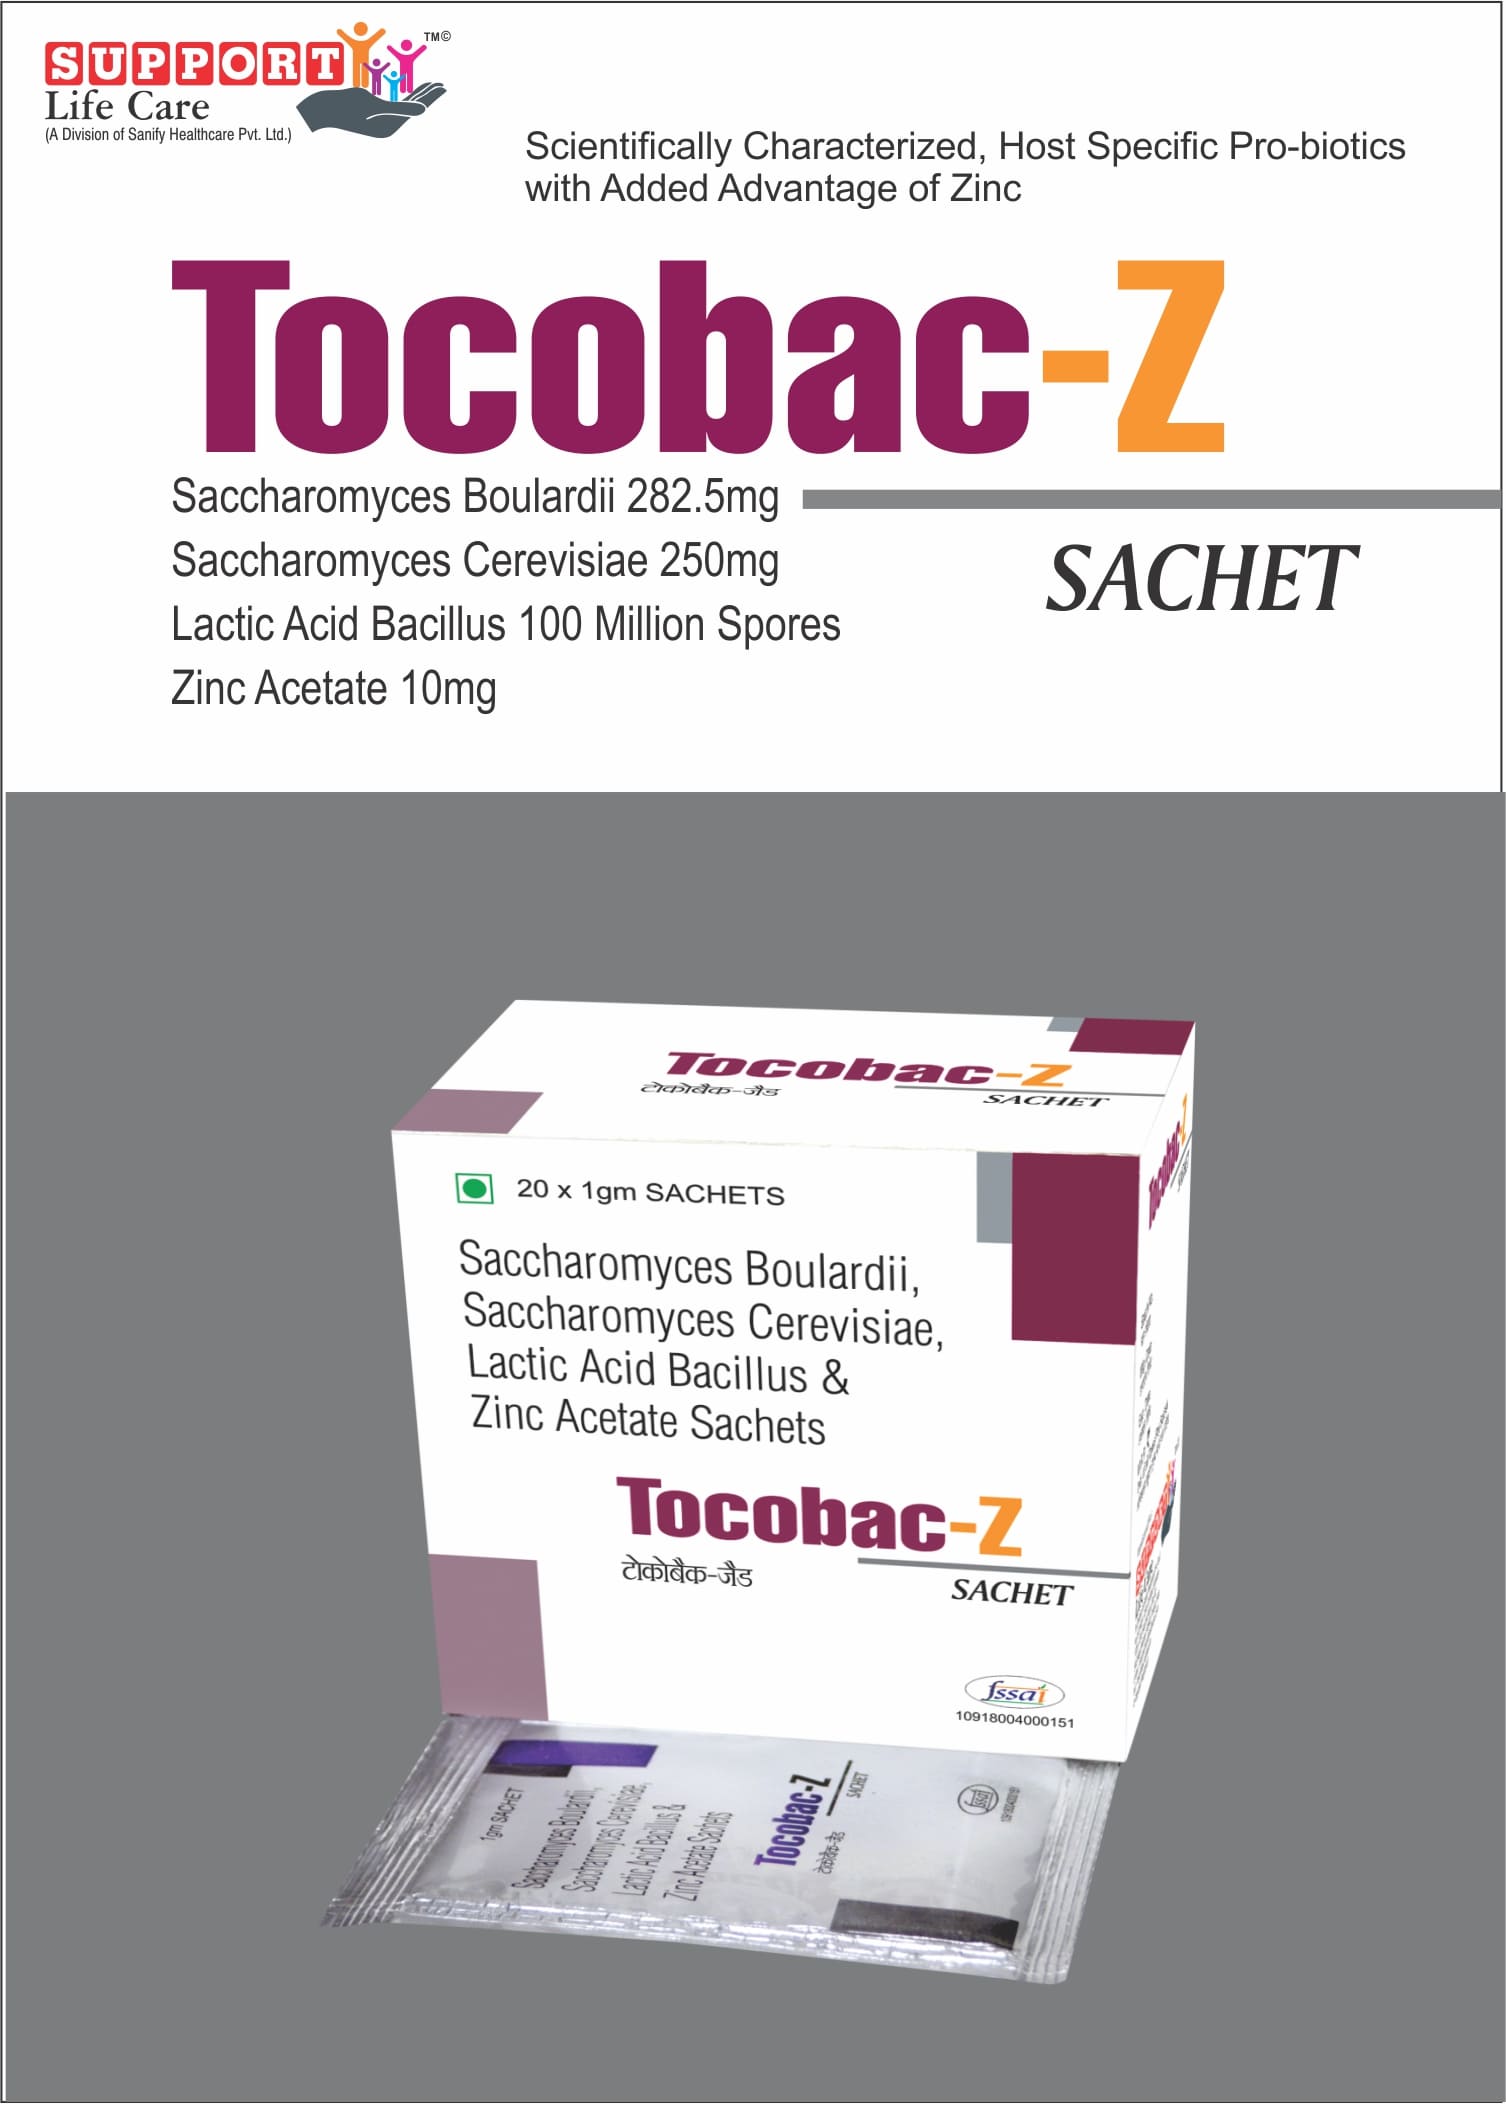 Saccharomycin Boulardii 282.50mg + Saccharomycin cerevisiae 250mg + Lactic Acid Bacillus 100ms + Zinc Acetate 10mg